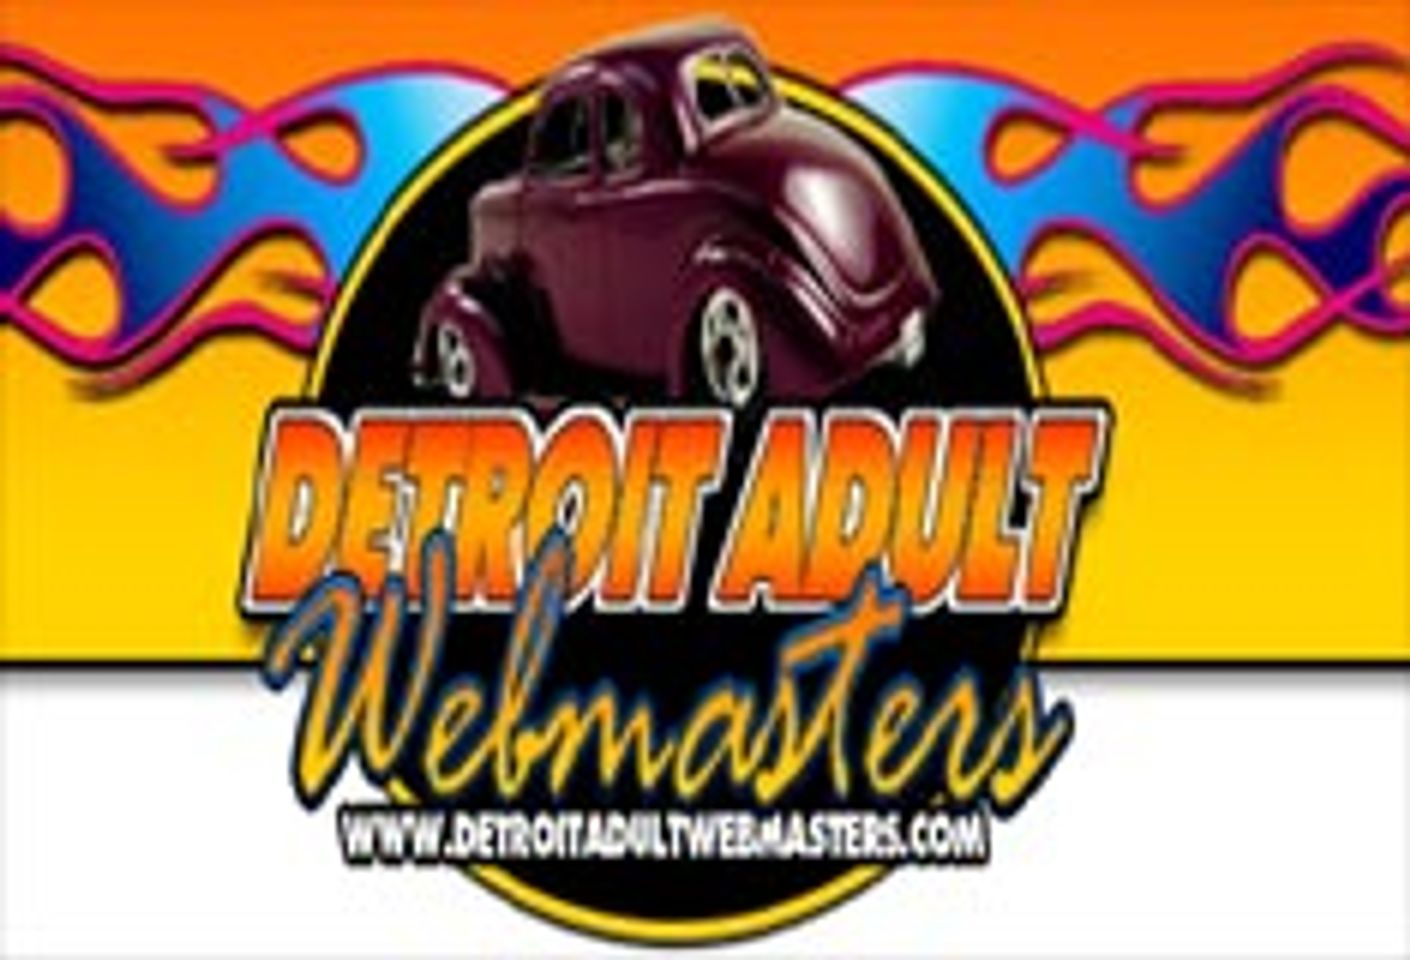 Detroit Adult Webmasters Launches